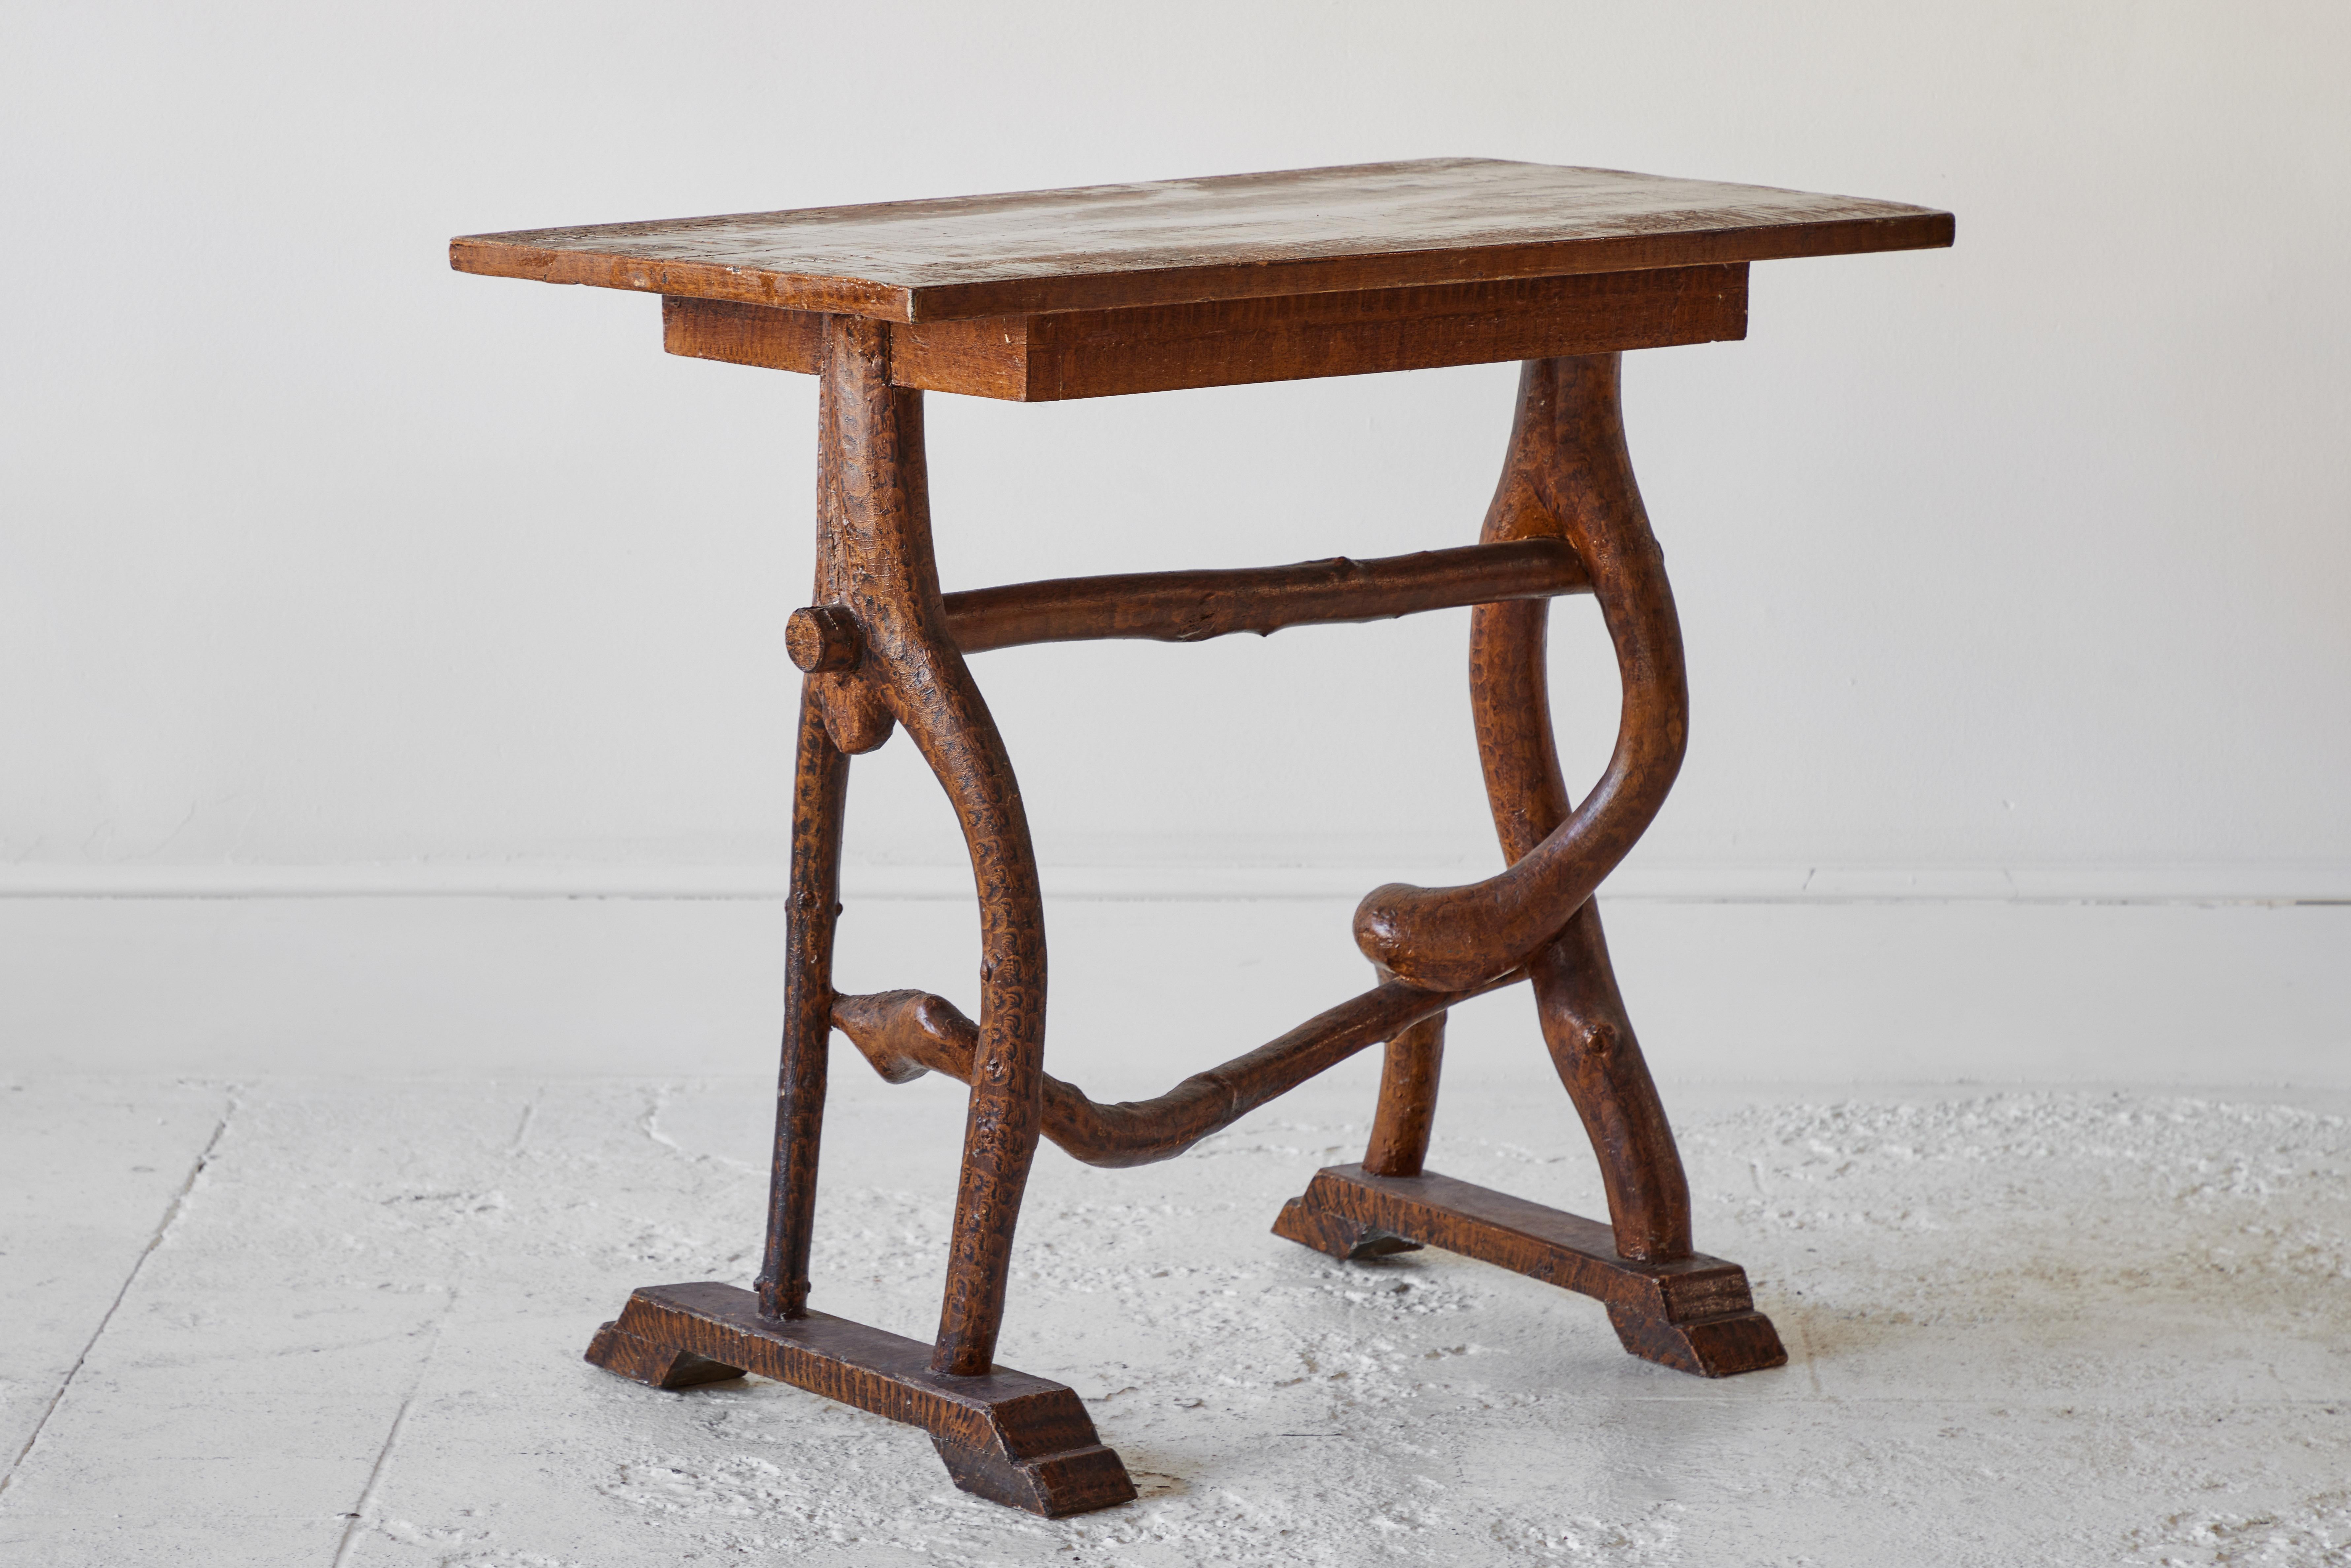 Wood Swedish Table and Chair Set